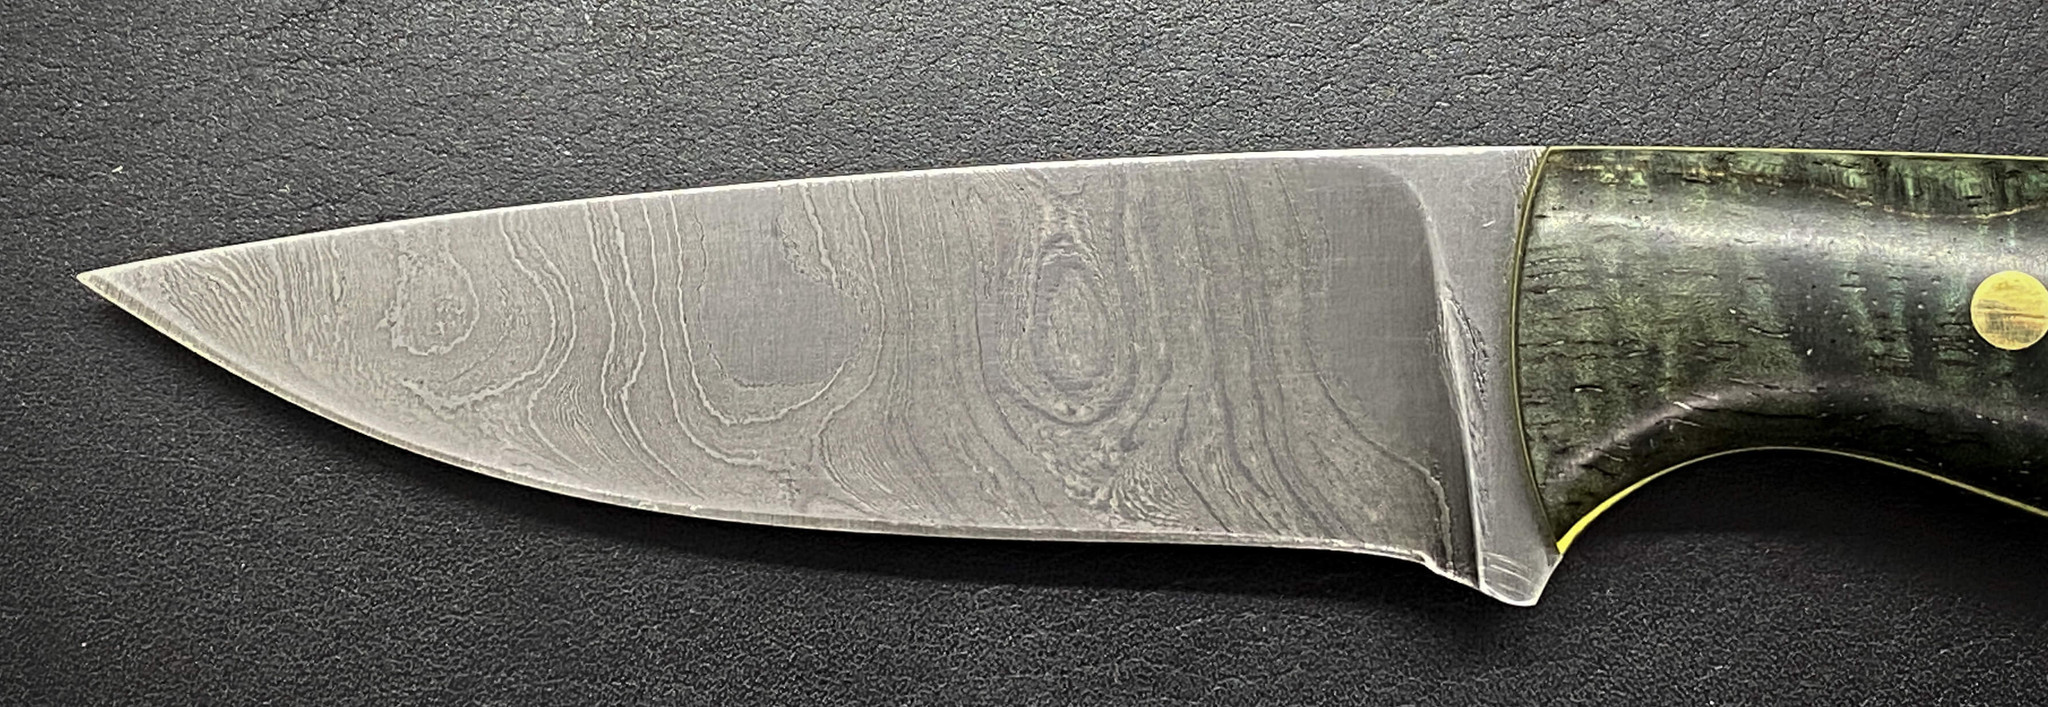 Custom EDC Stainless Steel Fixed Utility Blade Knife Sheath Belt